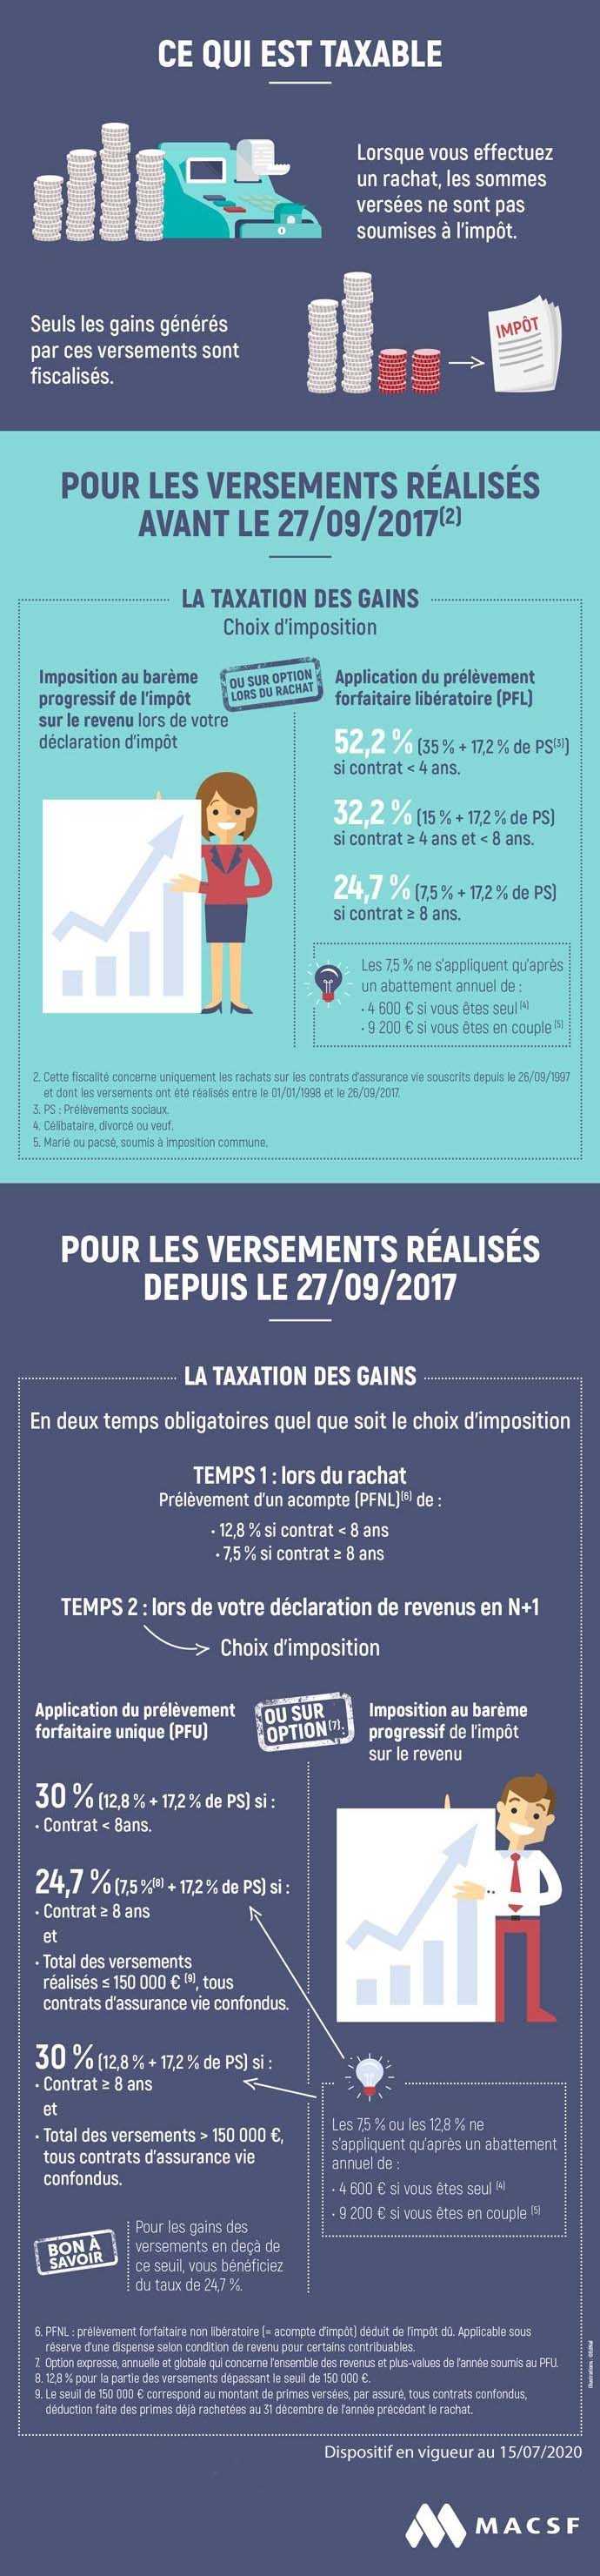 Infographie fiscalité rachats MACSF